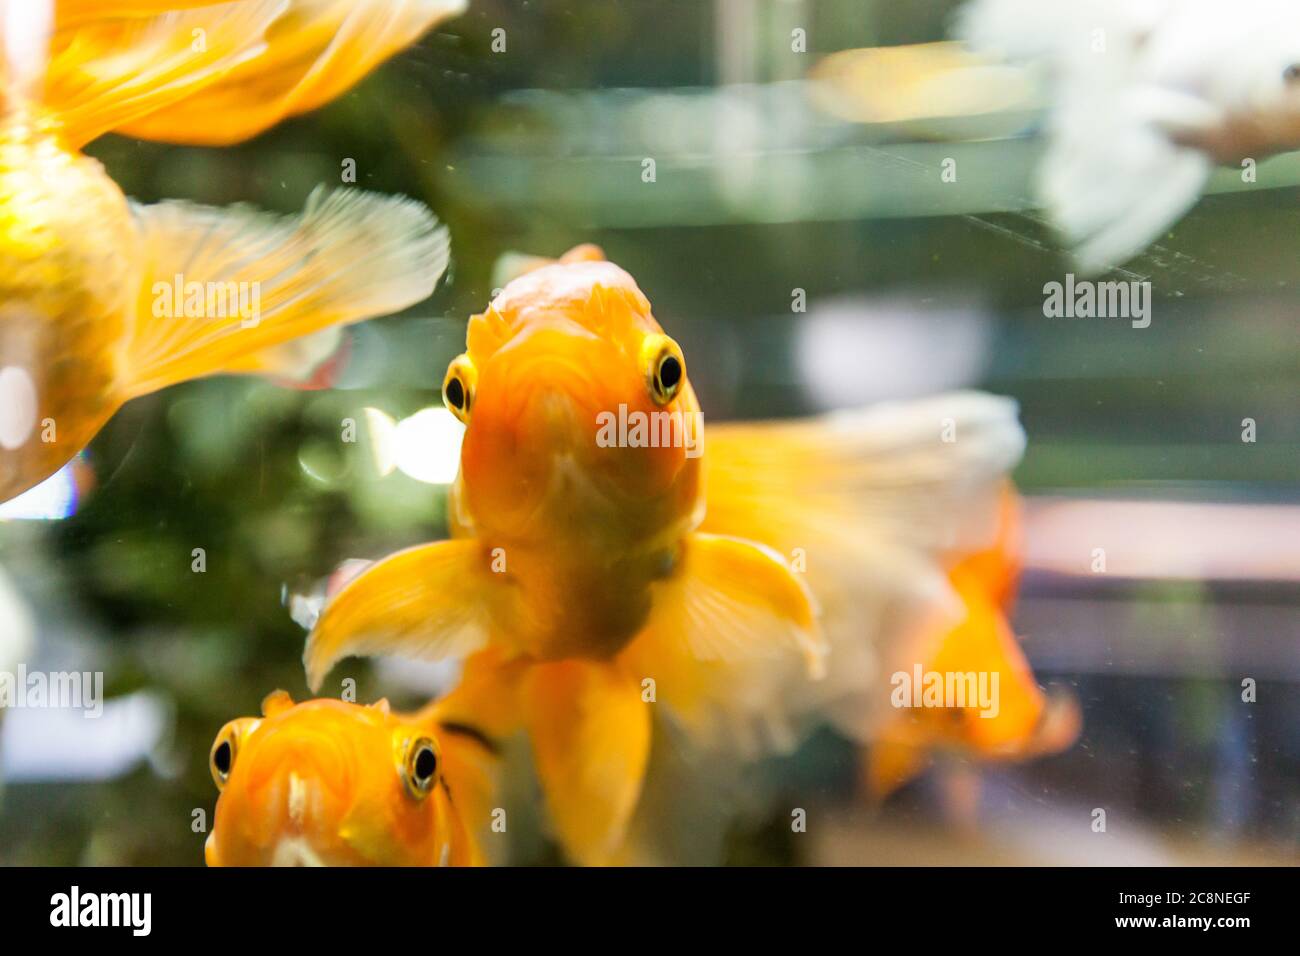 Goldfish in freshwater aquarium, closeup view Stock Photo